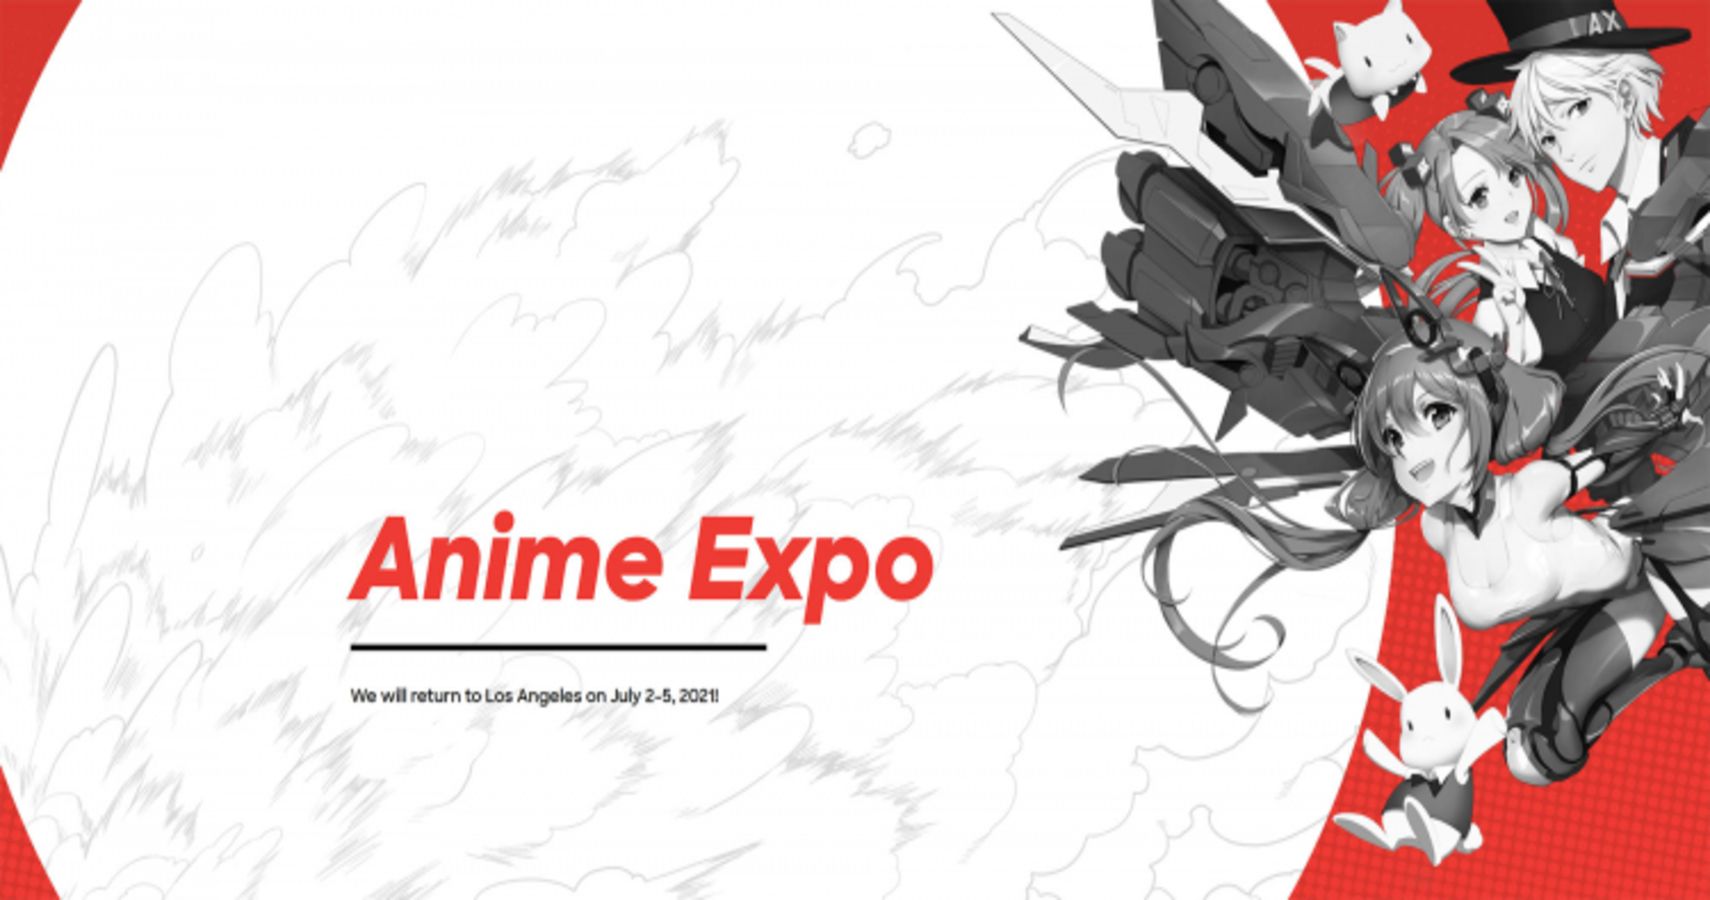 When Do Anime Expo Tickets Go On Sale